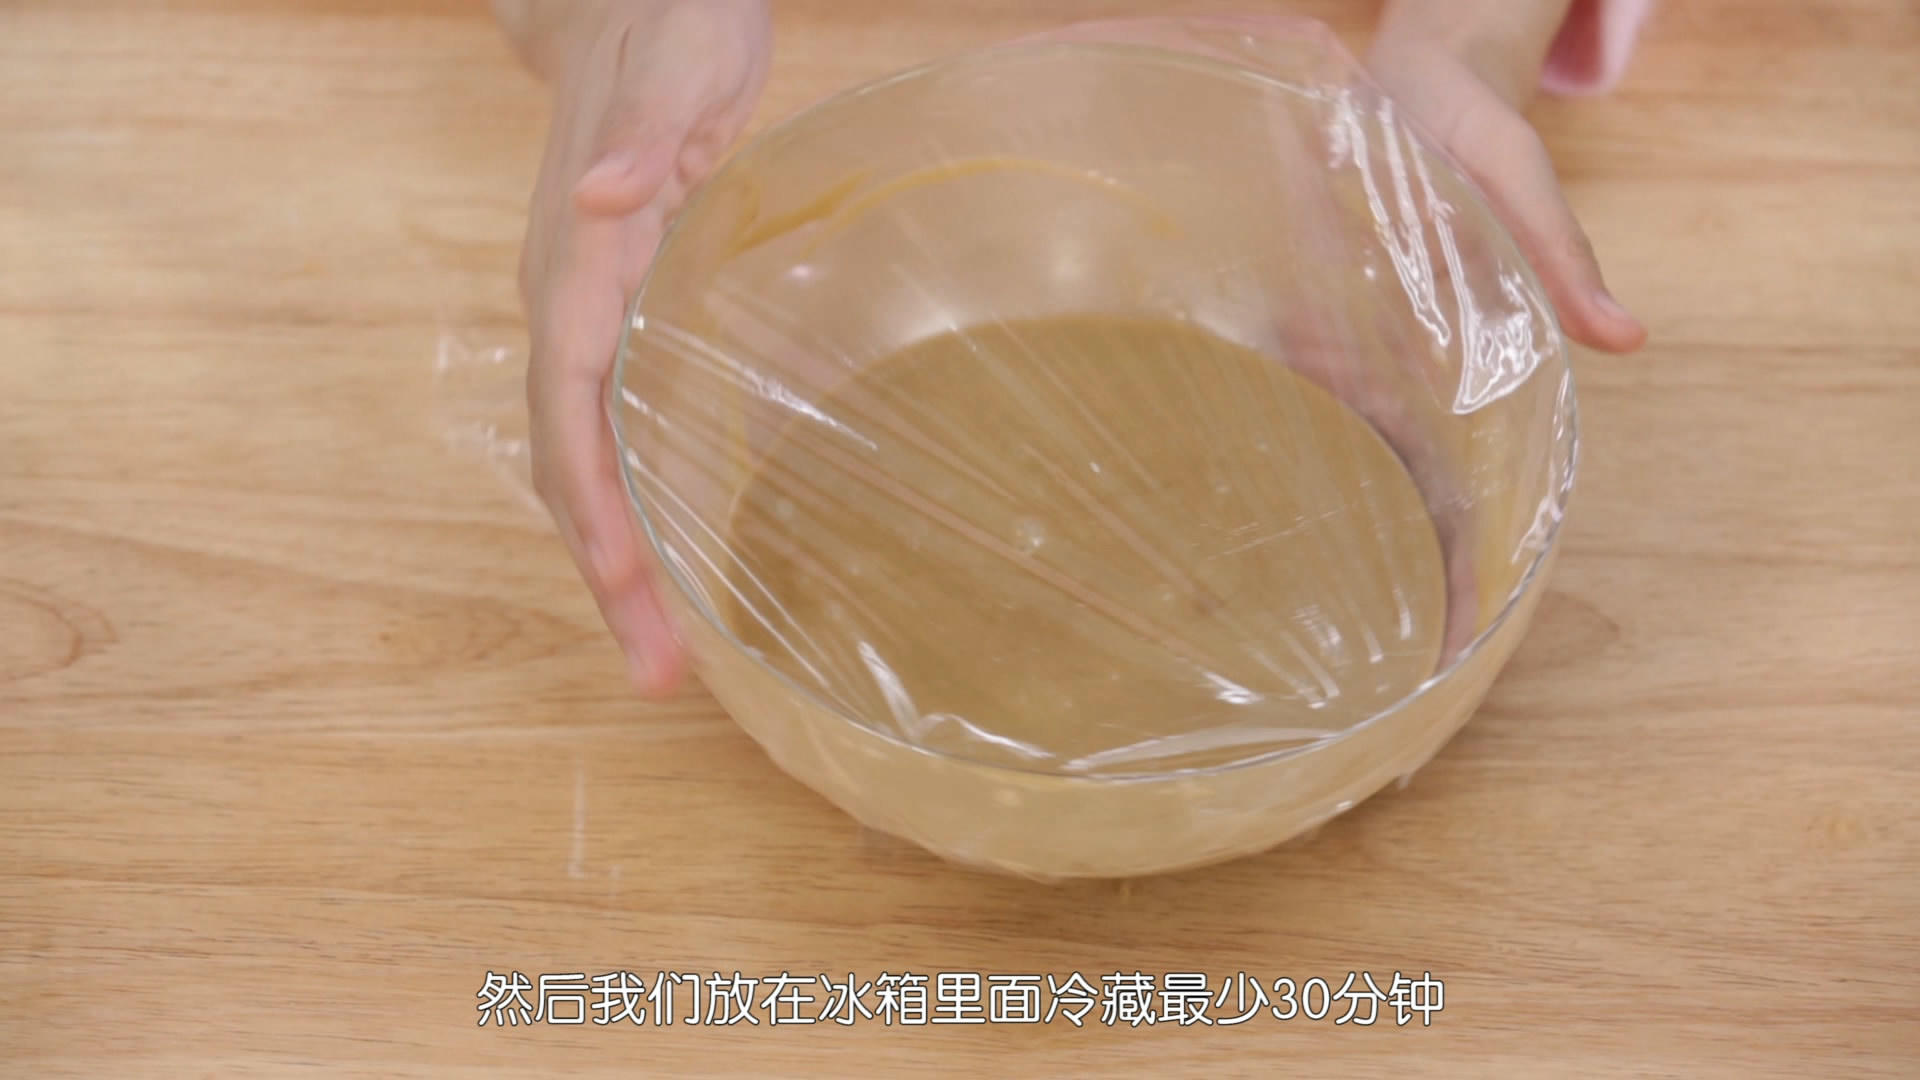 《Tinrry下午茶》教你做脆皮蛋筒和脆皮碗的做法 步骤11